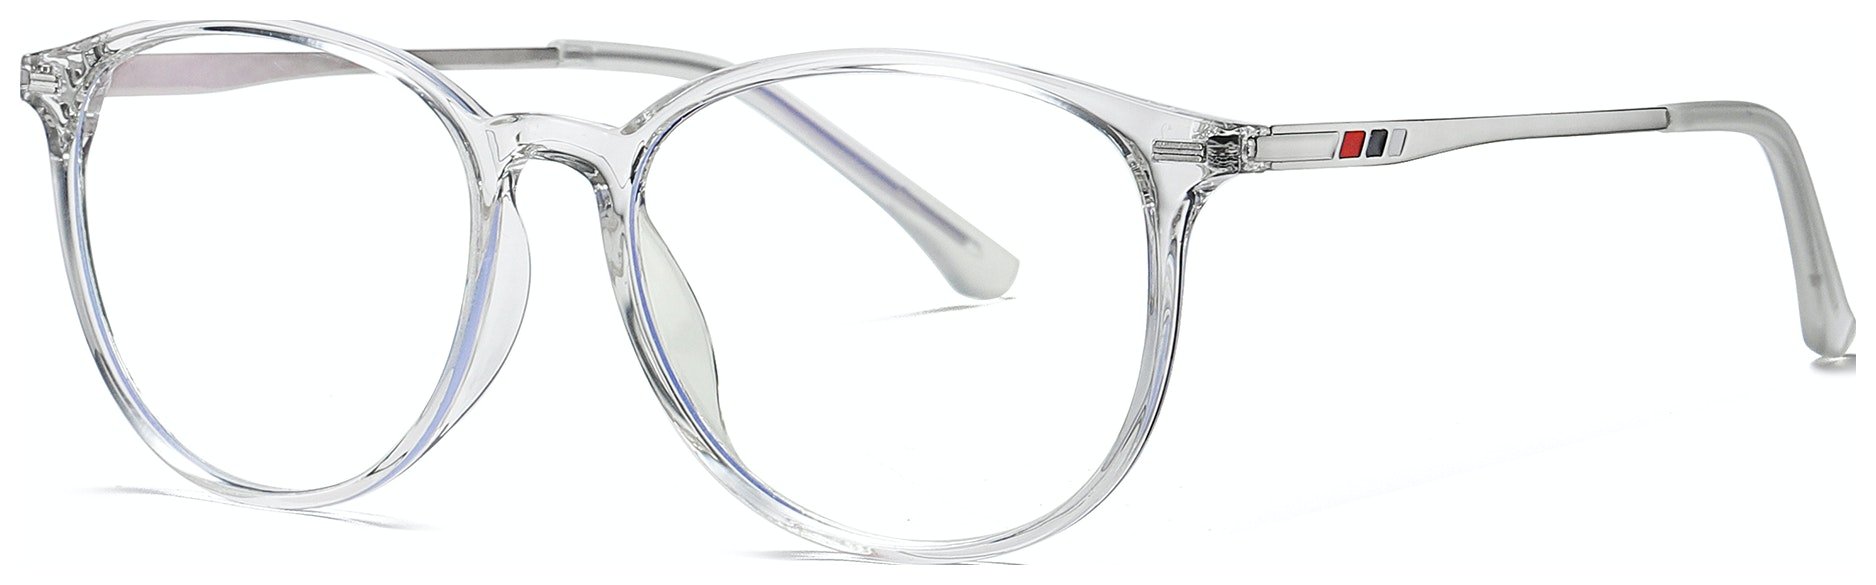 Regulær bluelight briller, Gory by Kaleu (H: 5,4 cm. x B: 1,7 cm. x L: 14,5 cm., Hvid)